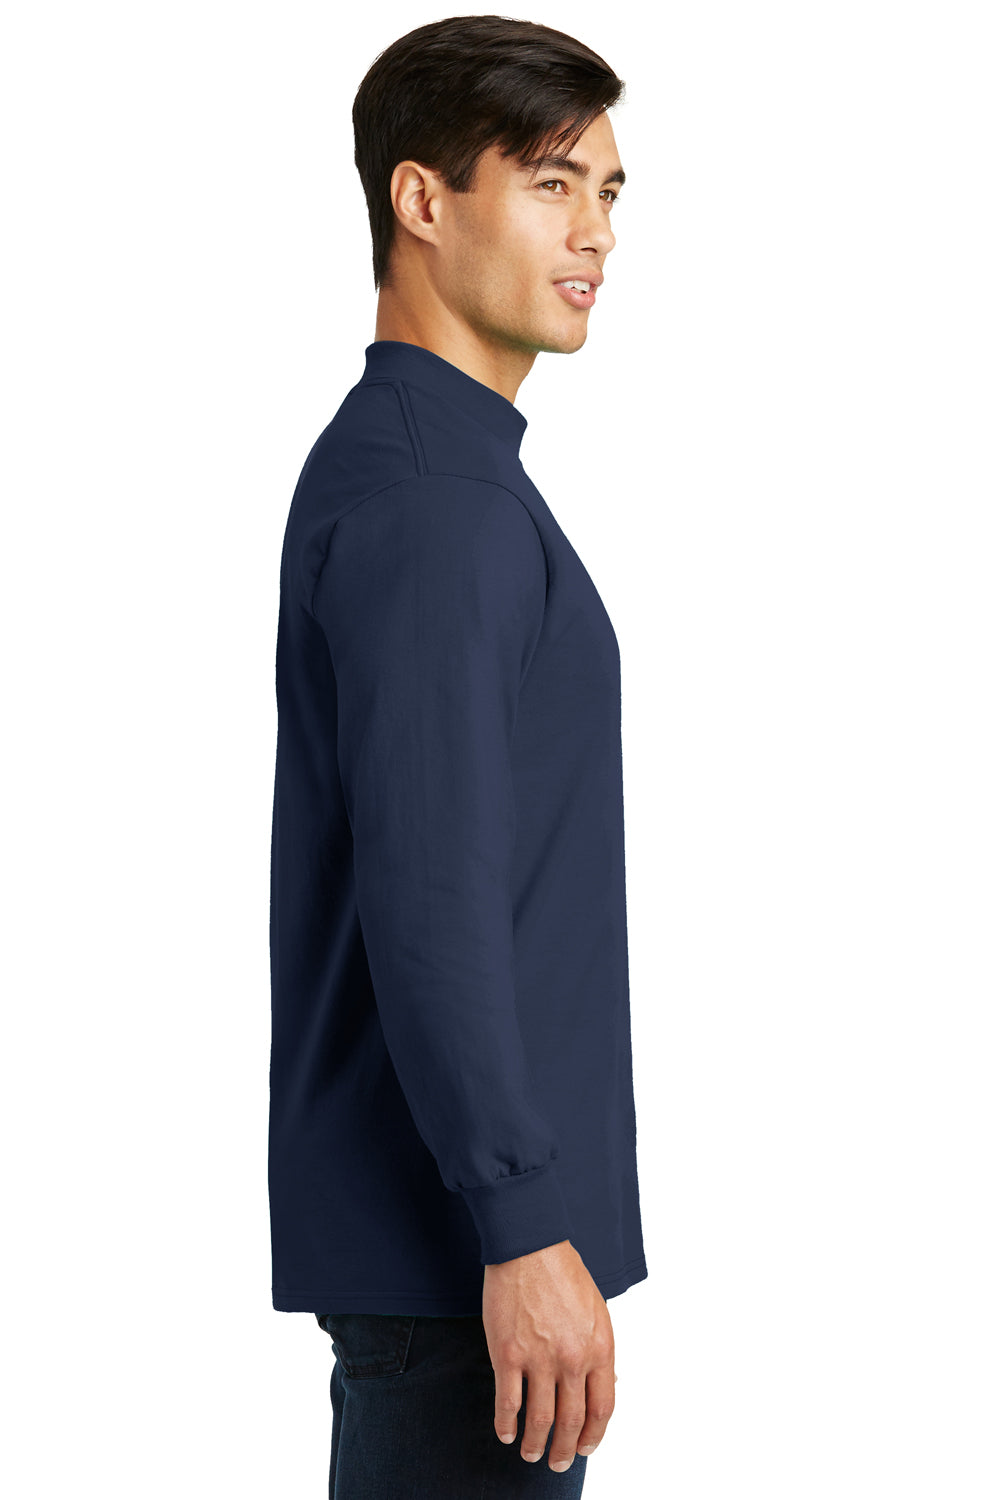 Port & Company PC61M Mens Essential Long Sleeve Mock Neck T-Shirt Navy Blue Side